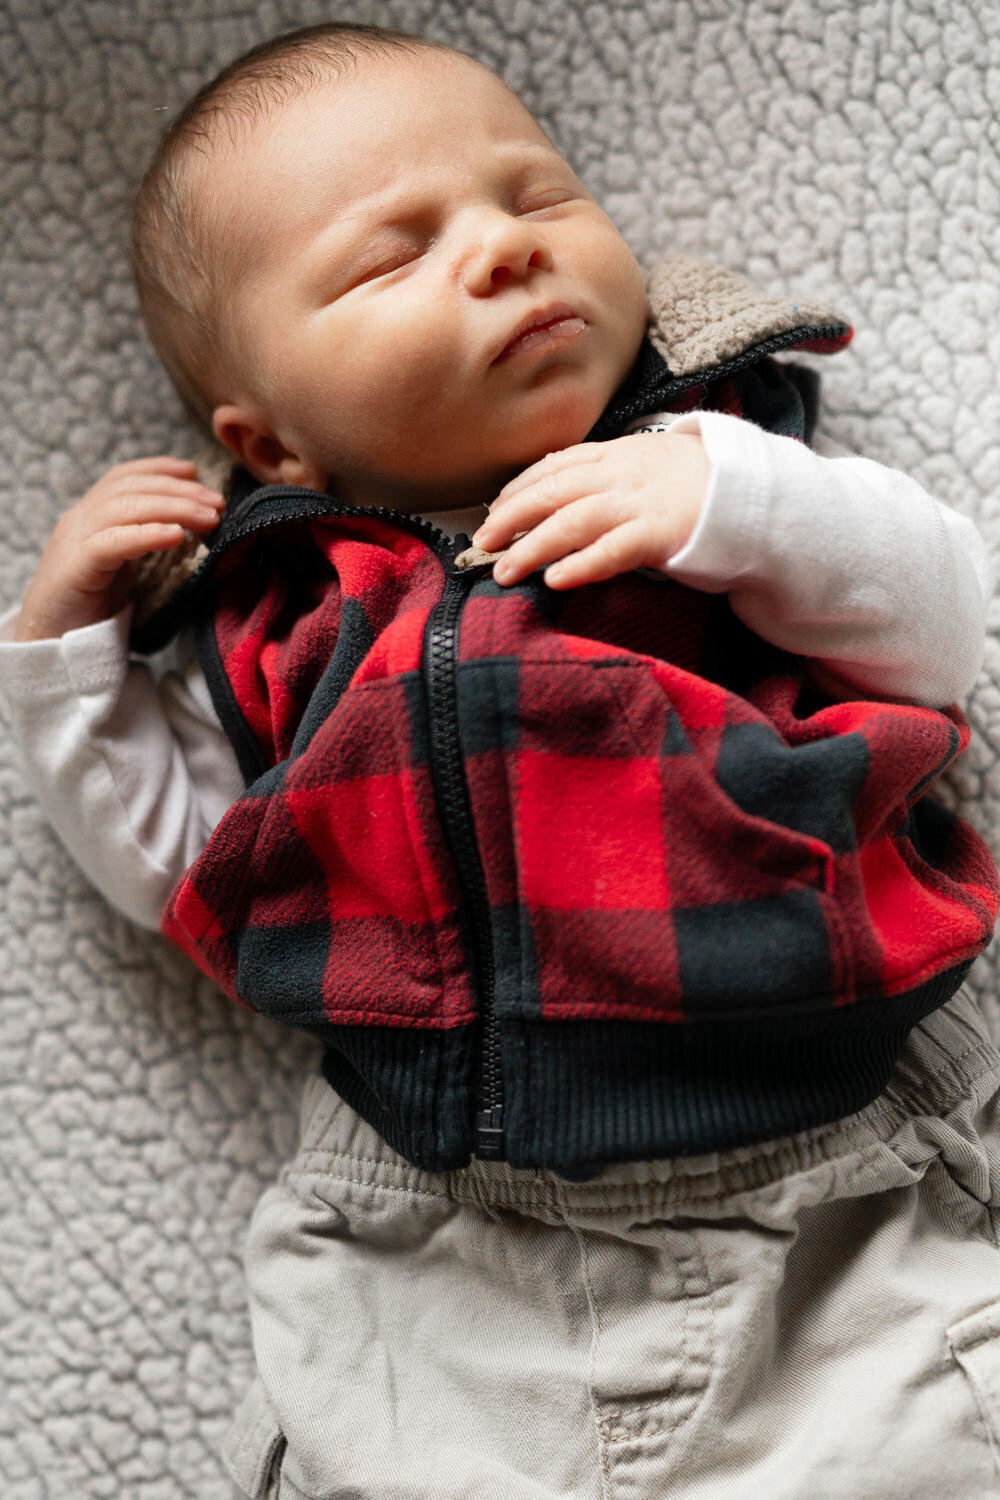 Minnesota Family Photography - Minnesota Newborn Photography - RKH Images (18 of 18)